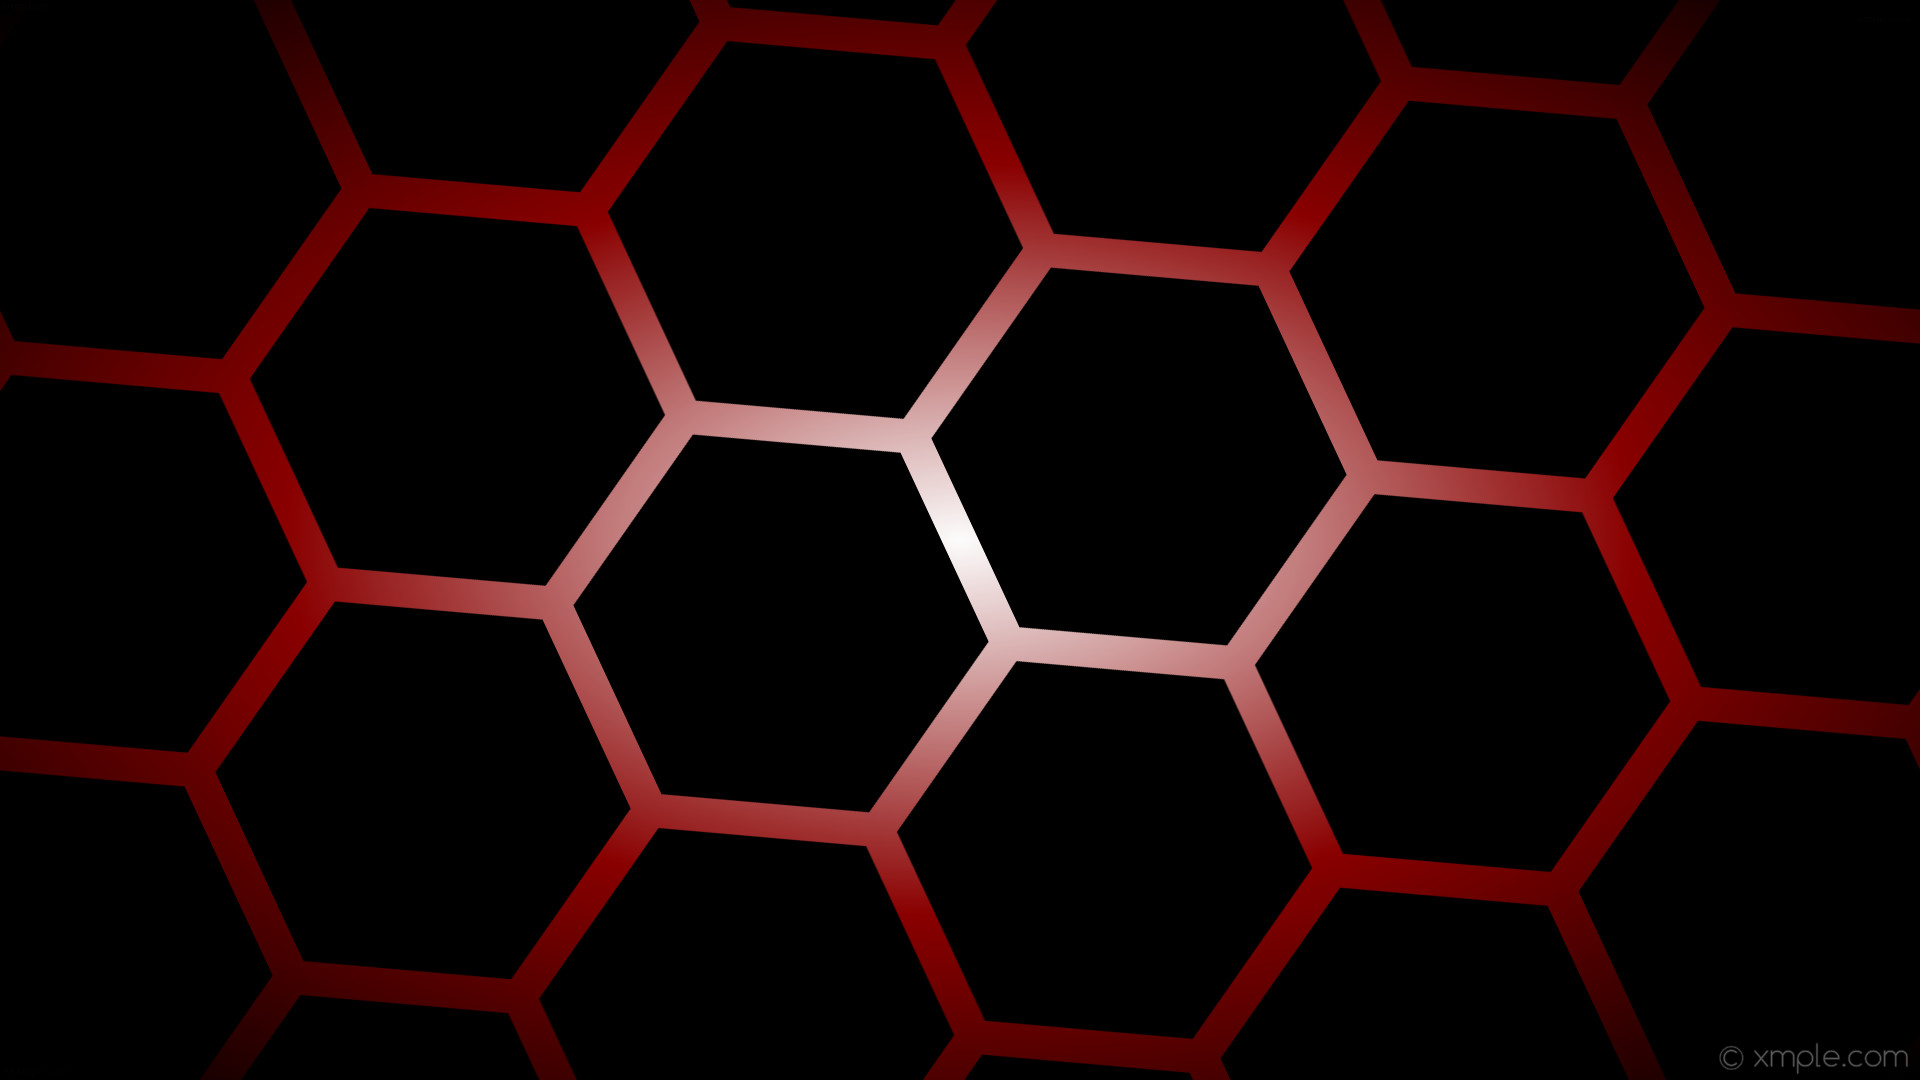 1920x1080 wallpaper white hexagon black red glow gradient dark red #000000 #ffffff  #8b0000 diagonal